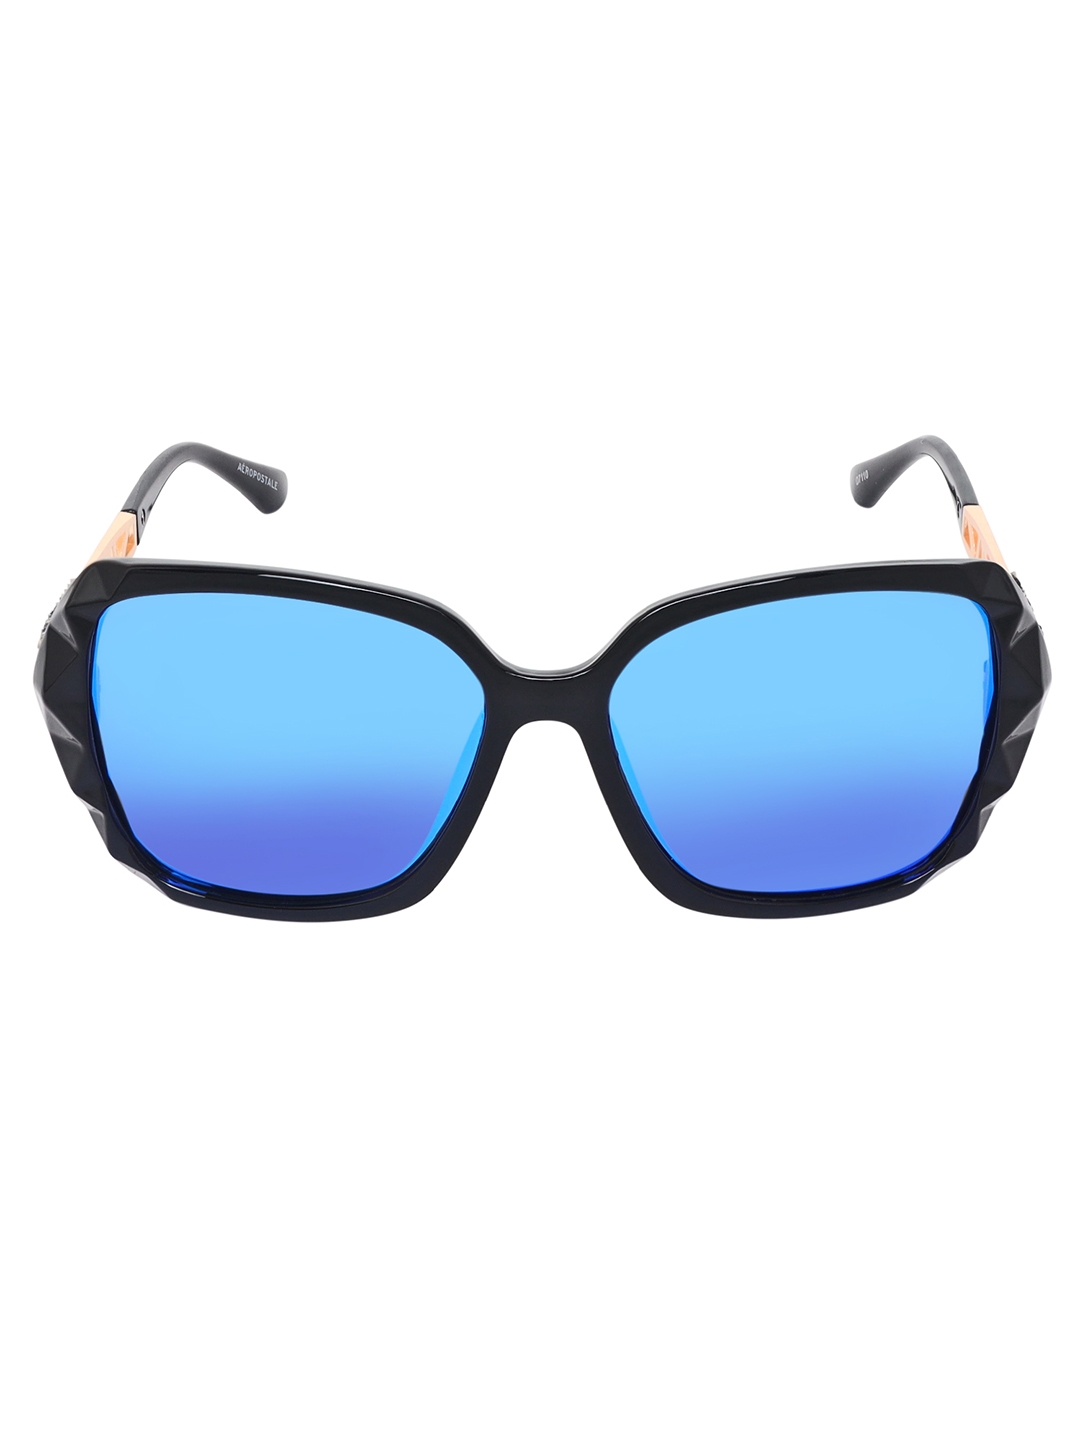 Aeropostale AERO_SUN_2538_C4 Summer Sun Glasses with UV protection Polarized Anti Glare Summer Style Dark blue Reflective Lenses with Black wide Acrylic Frame